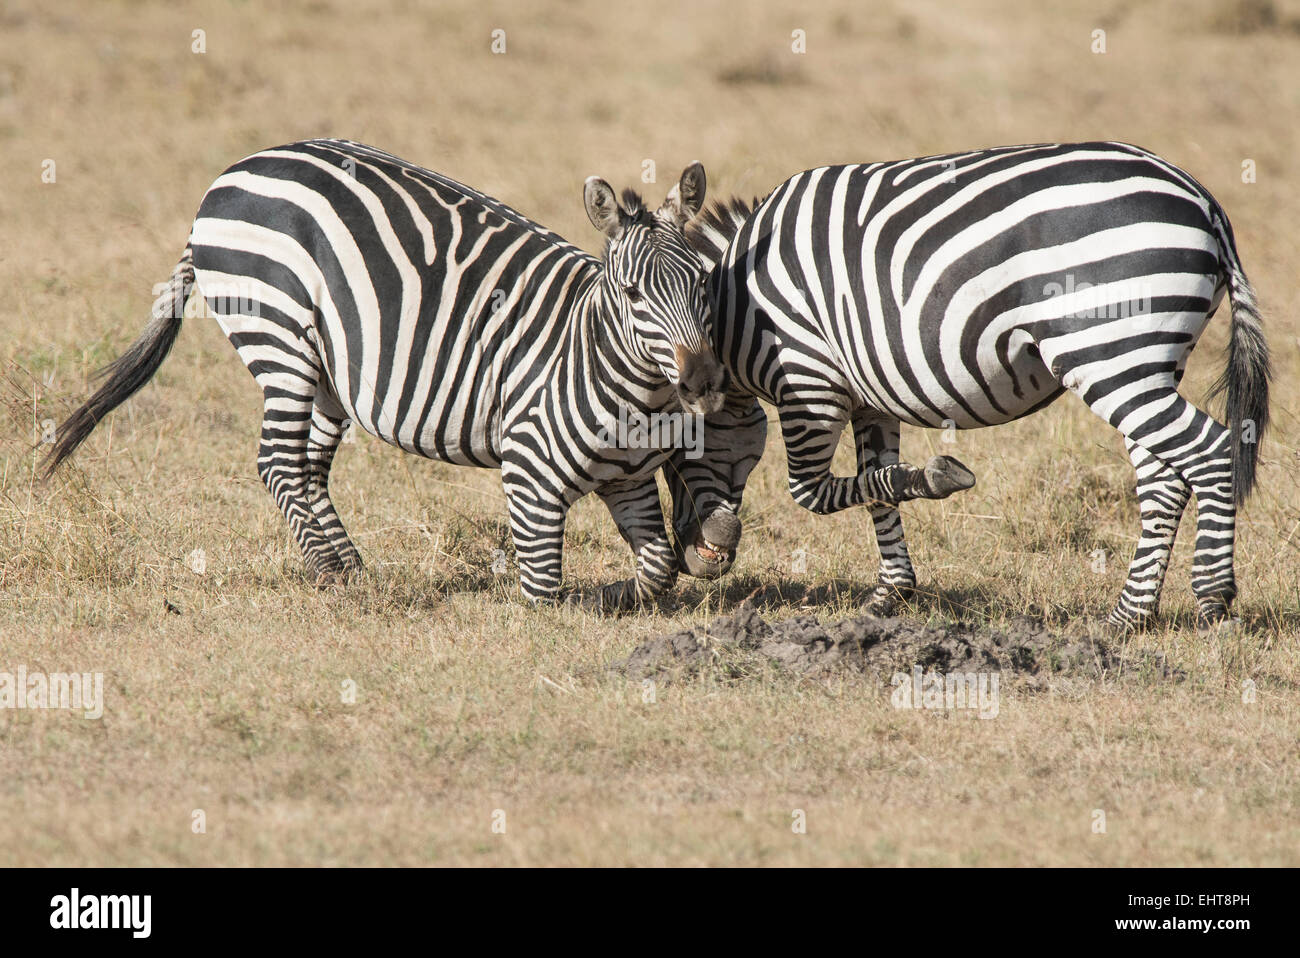 Zebra,Equus quagga,Stepp Fotodienst Schreyer 0049 172 162 5407 www.sportfoto-schreyer.jimdo.com Afrika,in Kenia, Massai Mara 2015 Foto Stock